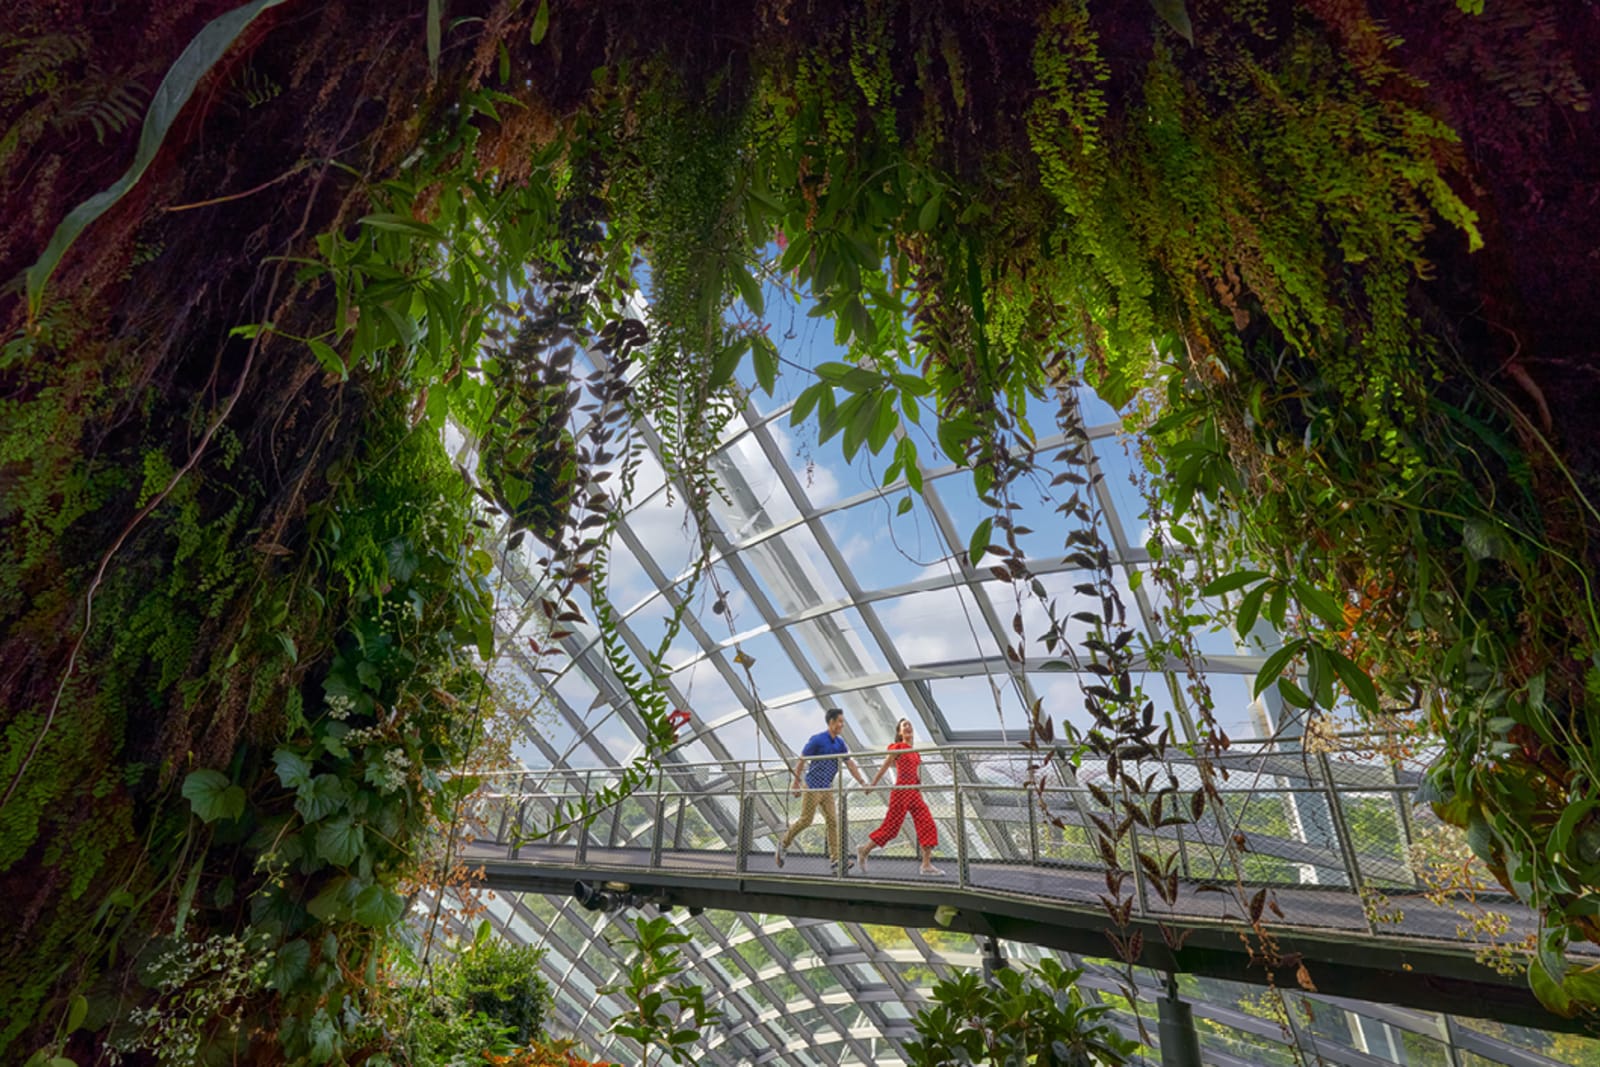 Two people exploring at the Singapore Botanic Gardens